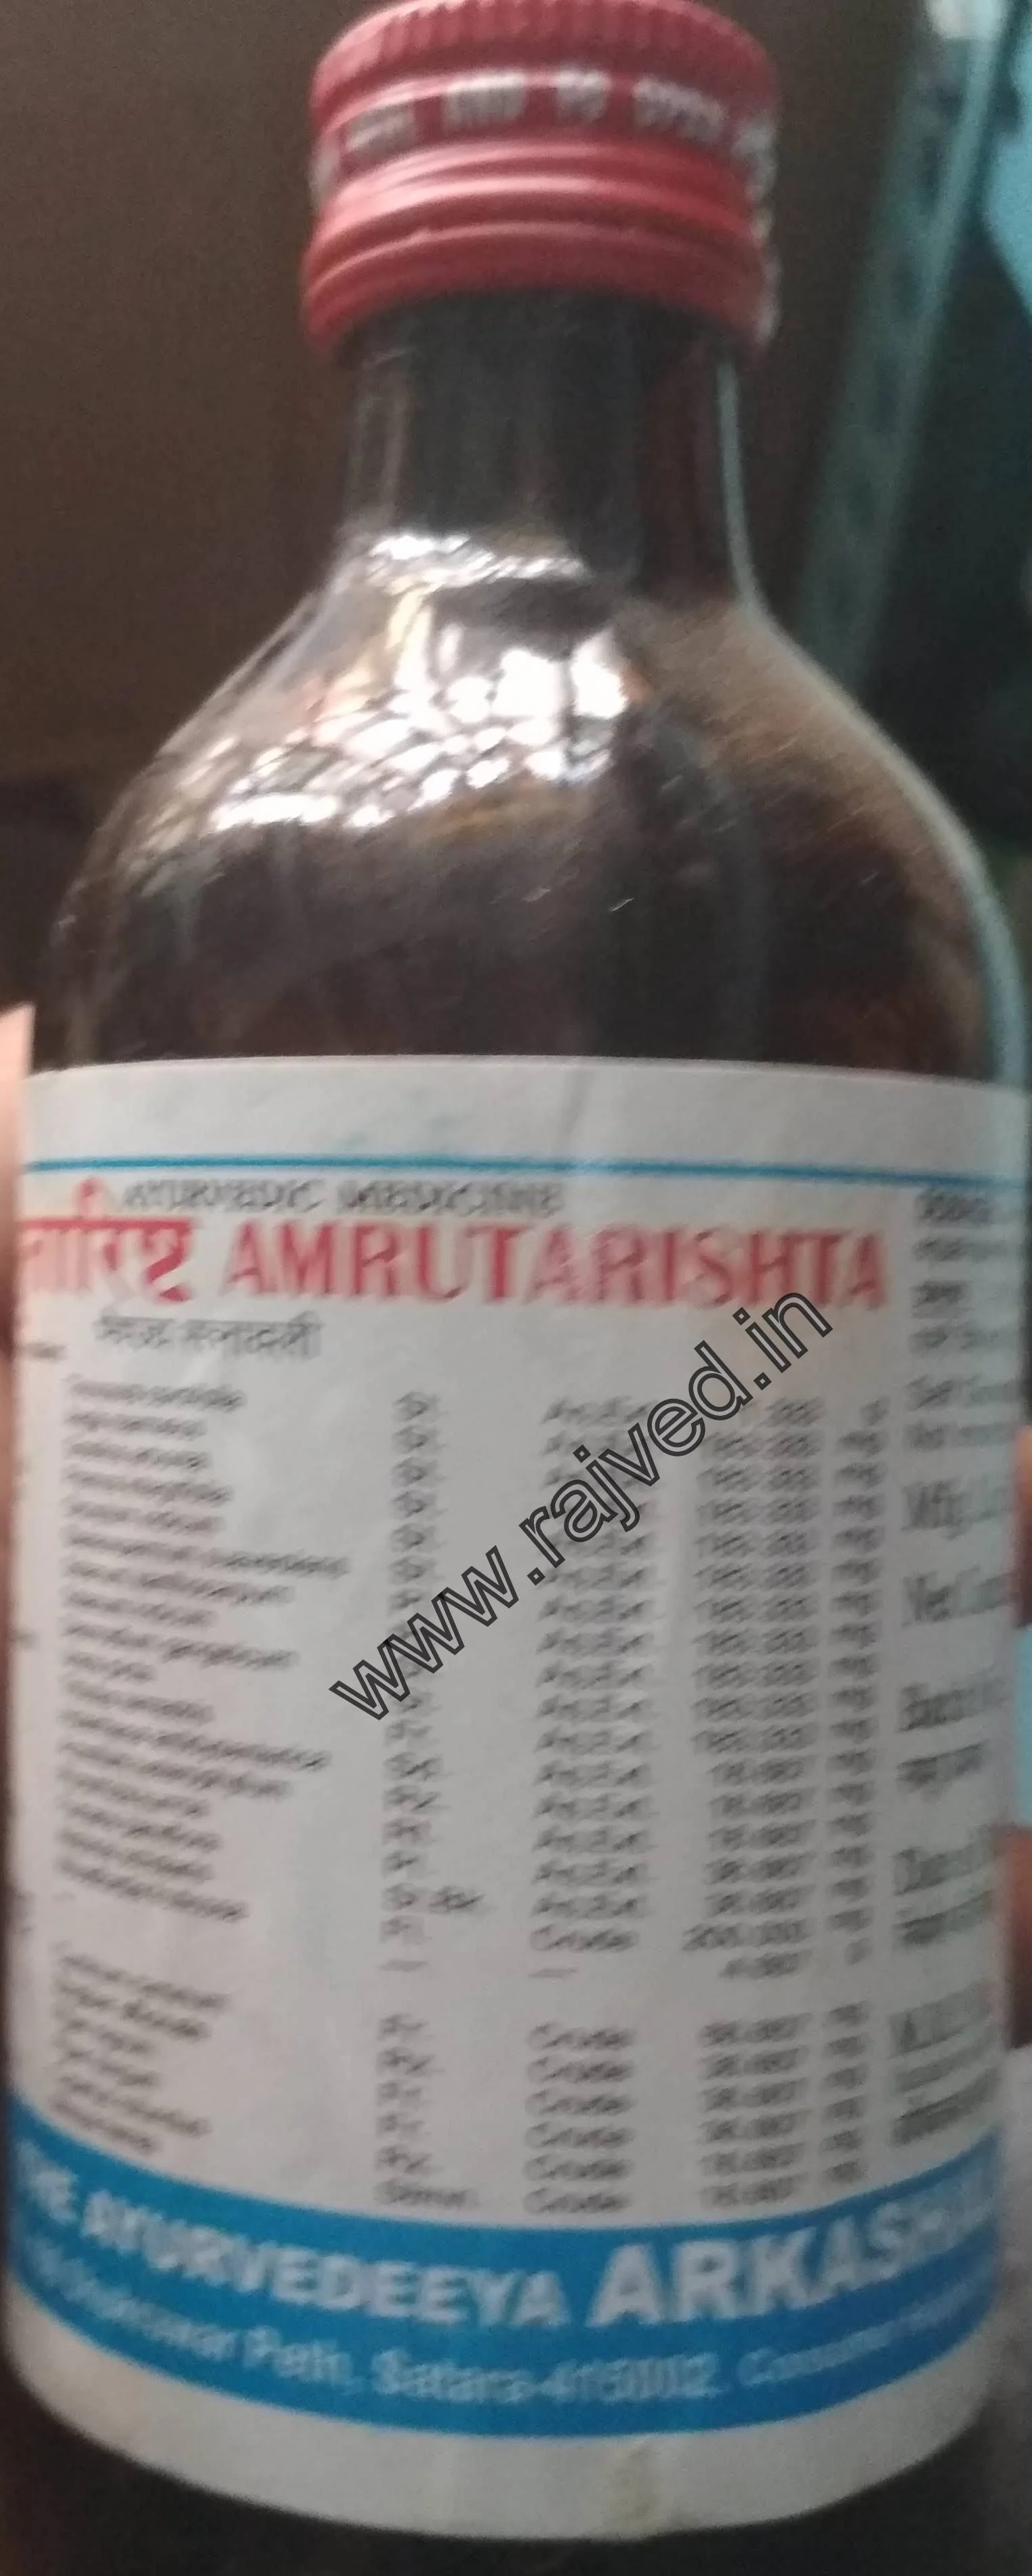 Amrutarishta 450 ml the ayurveda arkashala